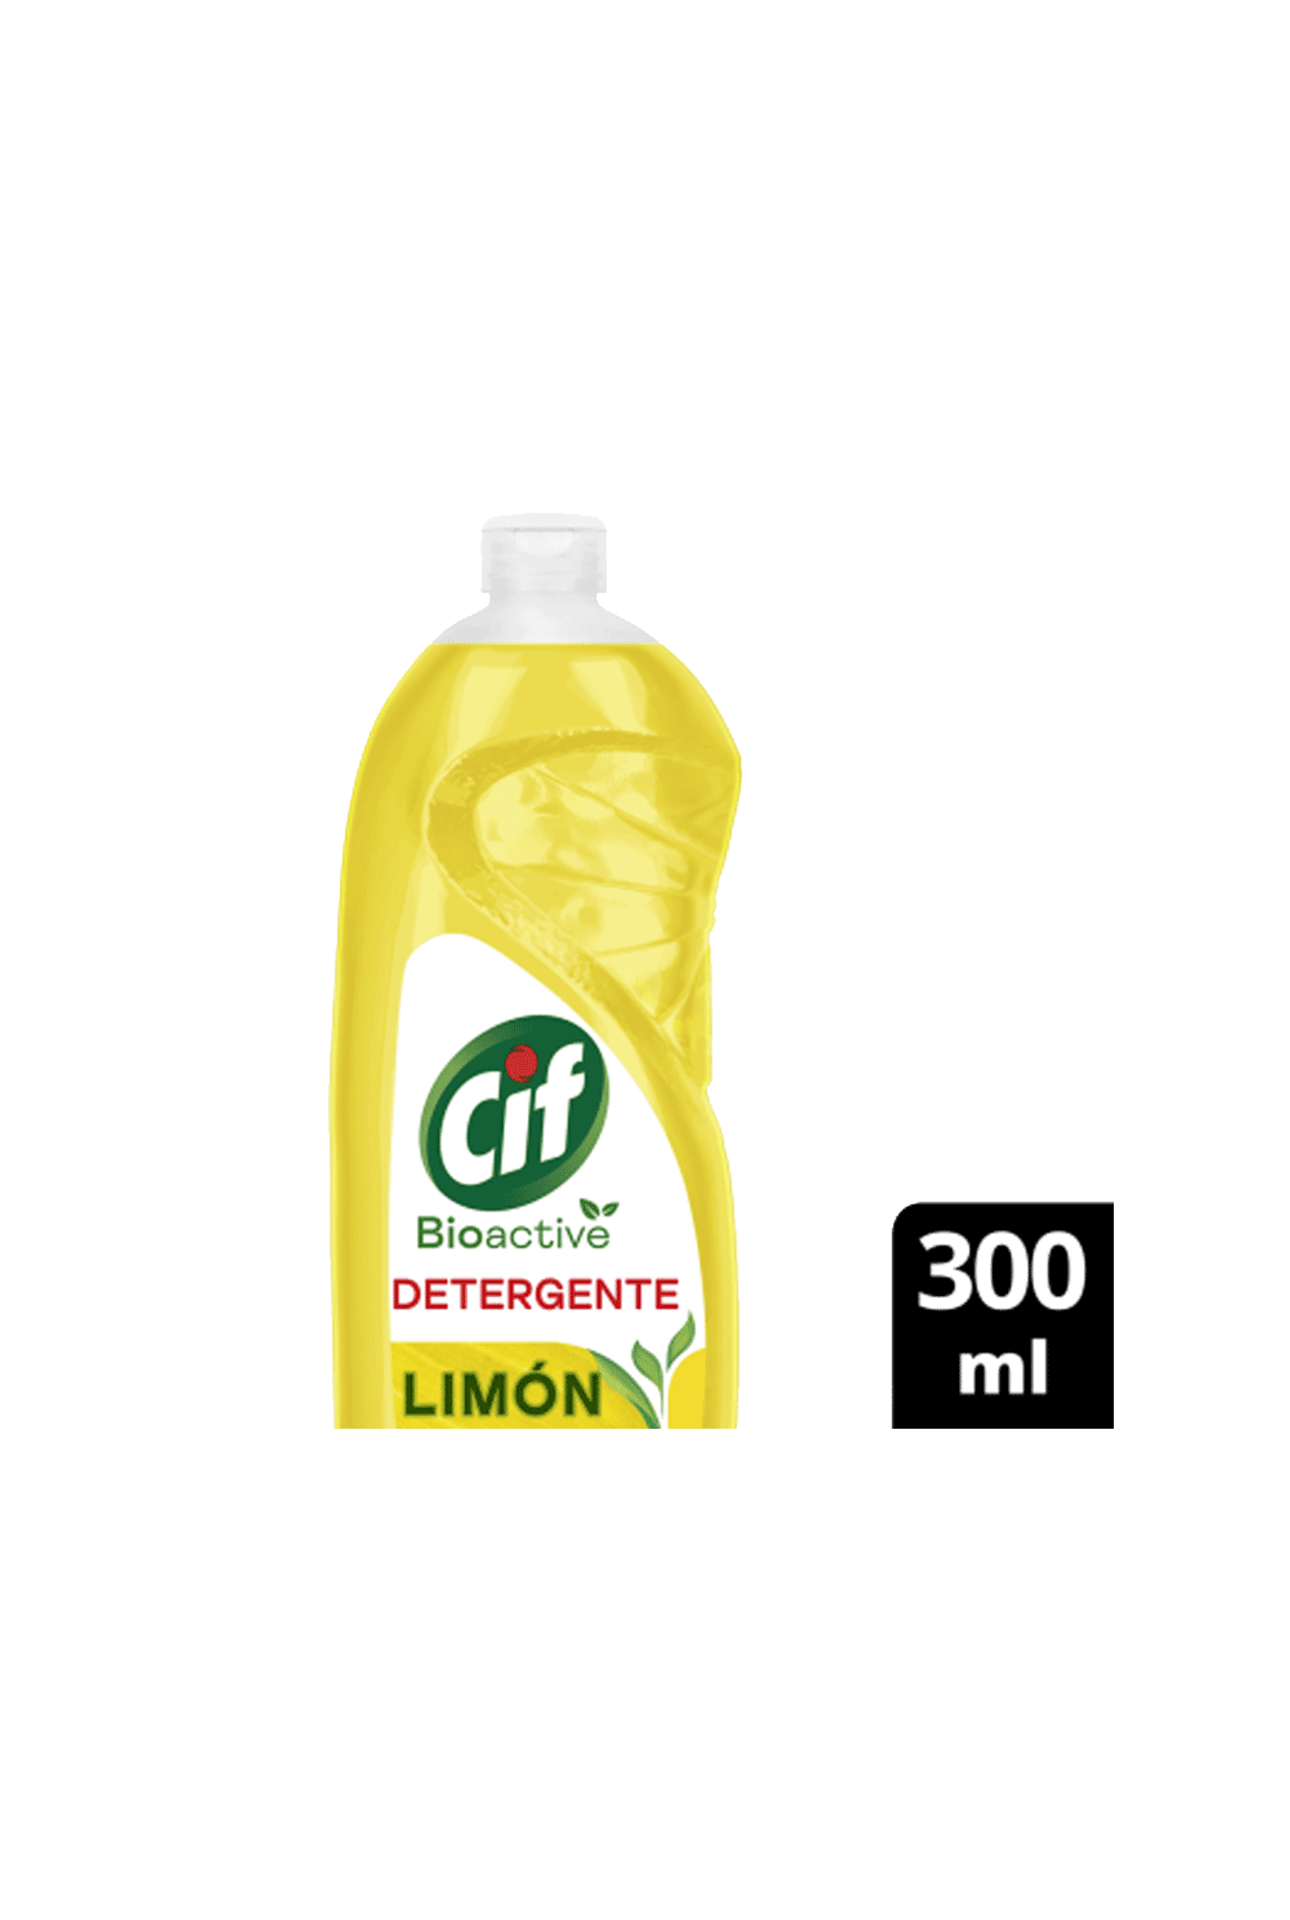 Cif-Detergente-Cif-Bioactive-Limon-x-300ml-7791290794054_img1